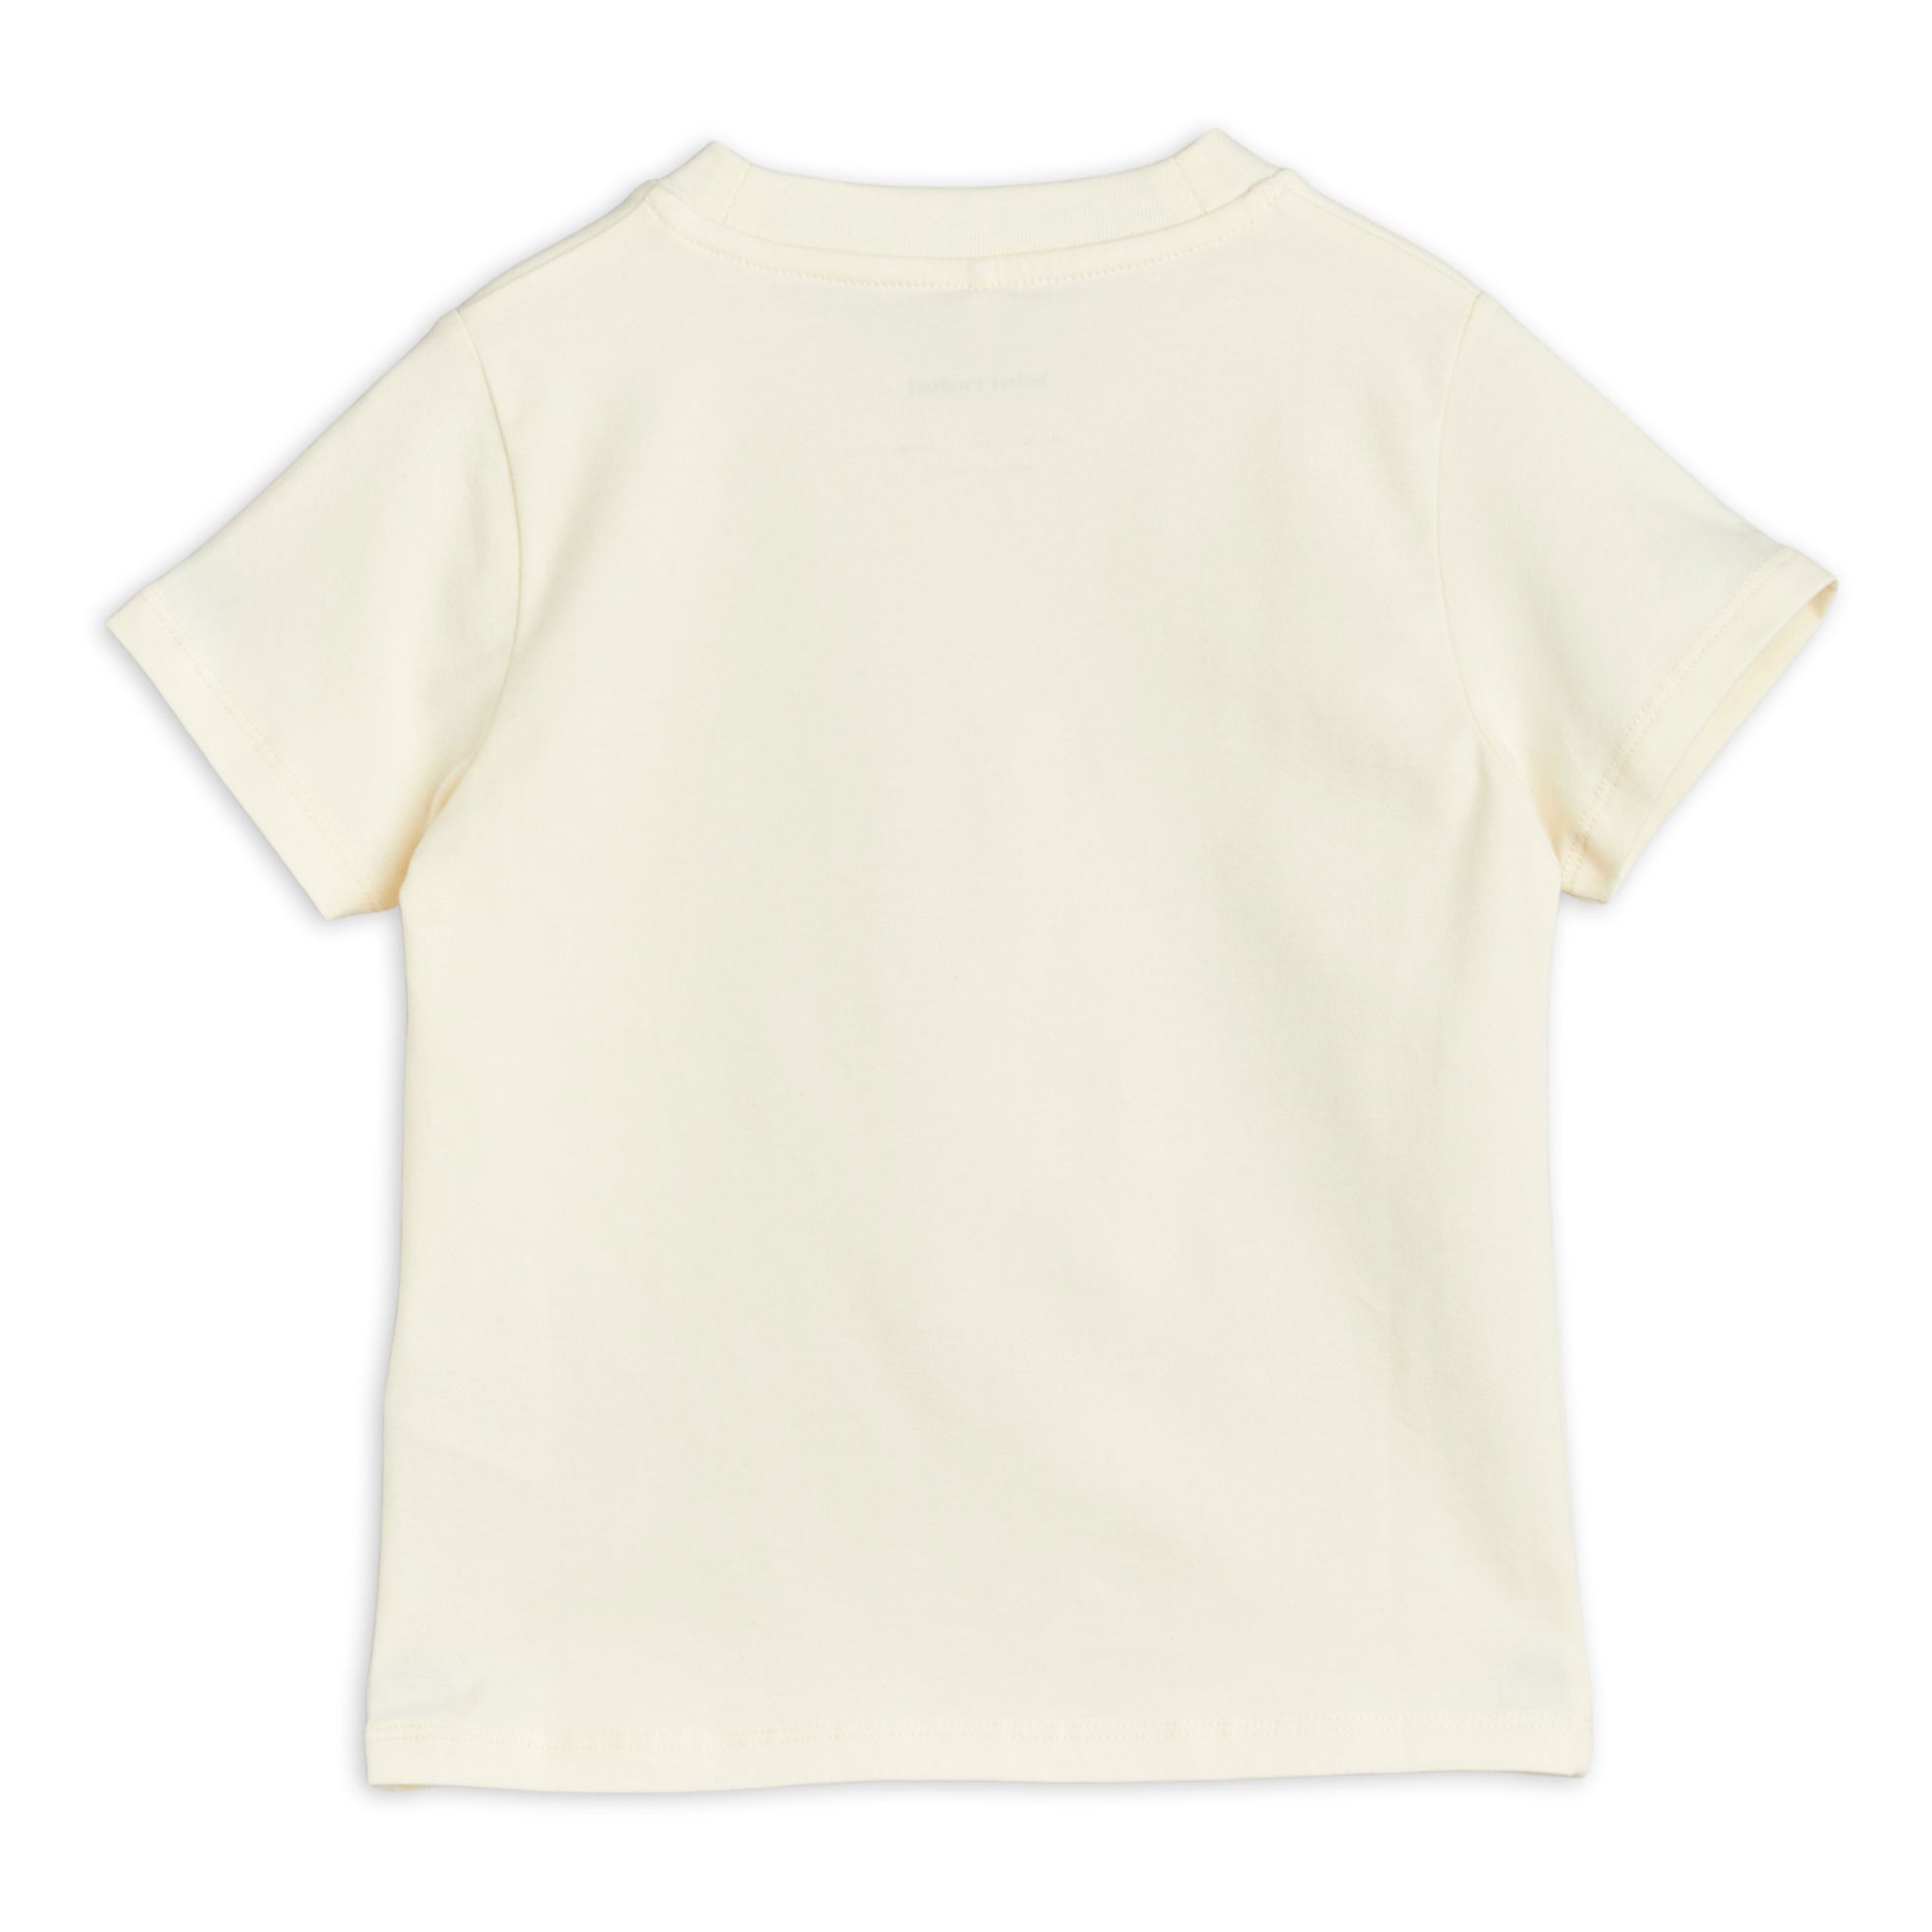 T-shirt Chats Blanc- Image produit n°2